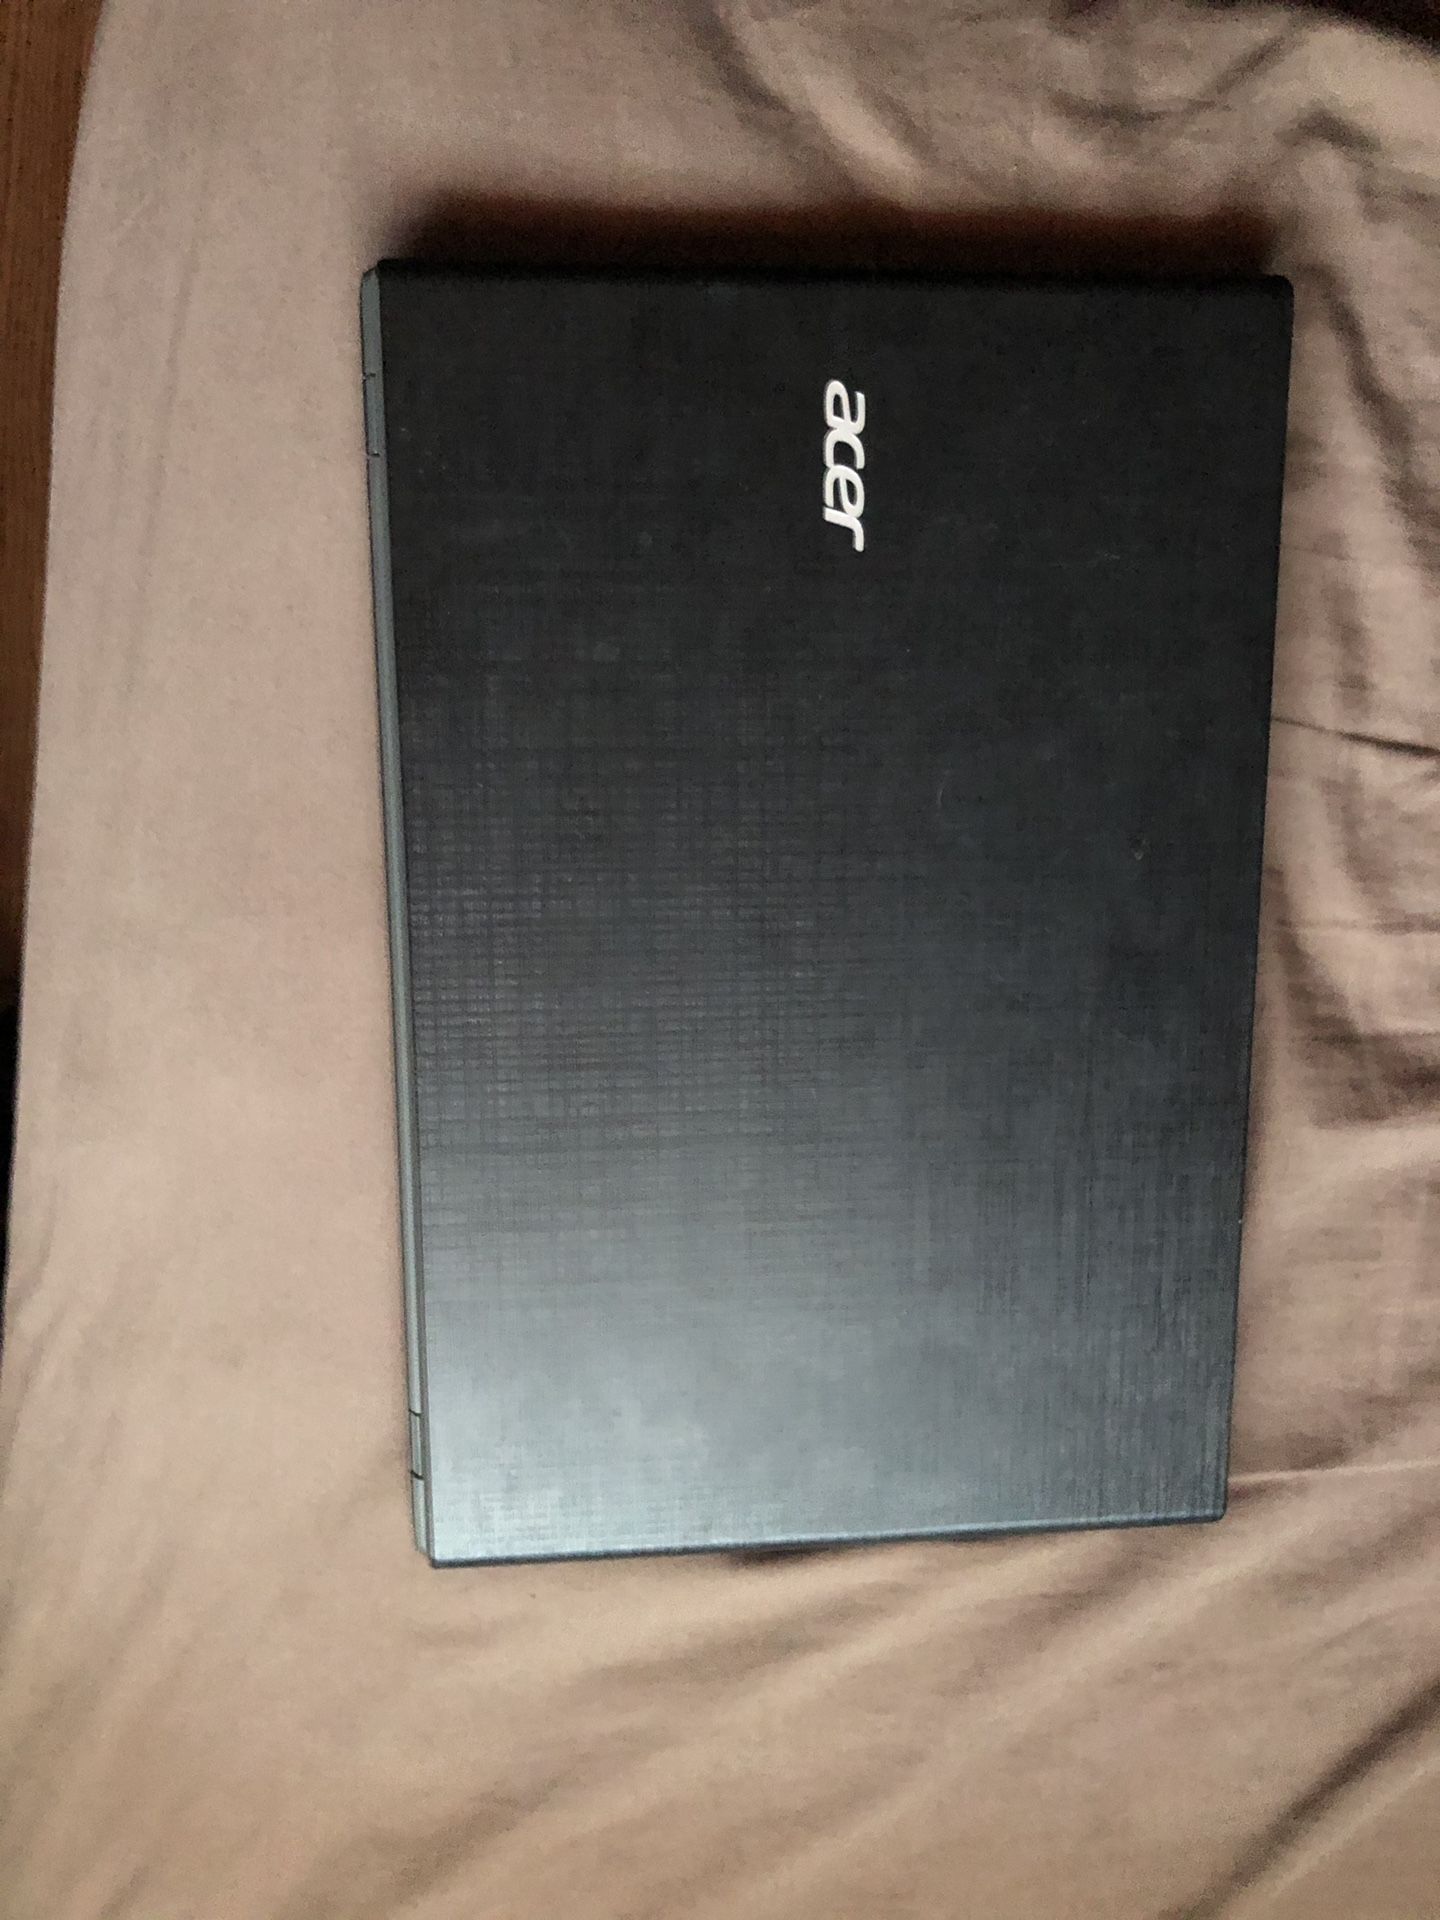 Acer Aspire E5-573G 15.6-Inch ***Gaming***Laptop (Intel Core i5-5200U, 8 GB RAM, 1 TB Hard Drive, Windows 10 Home), Black